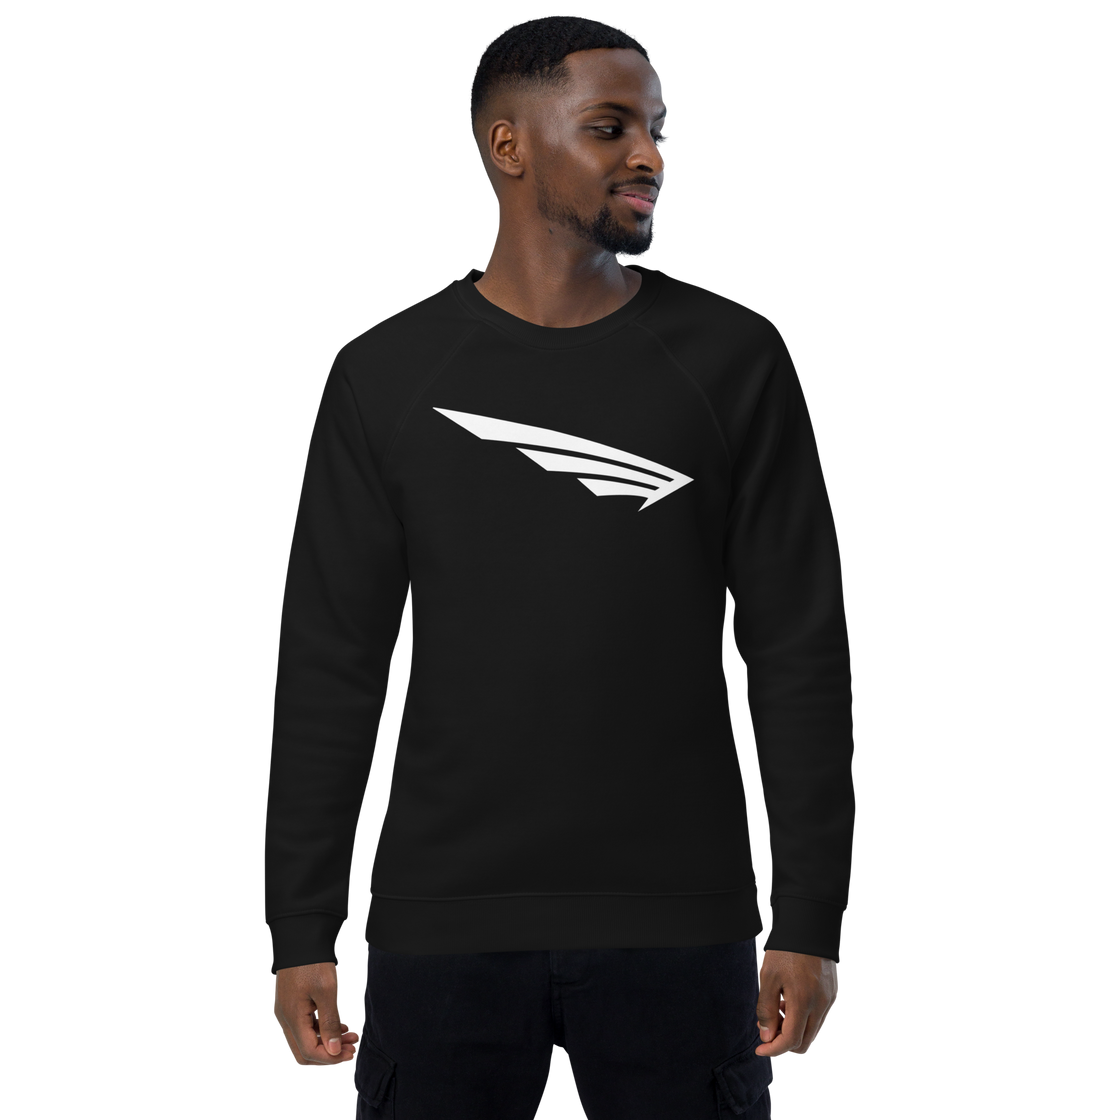 FLY³ organic raglan sweatshirt | Flycube